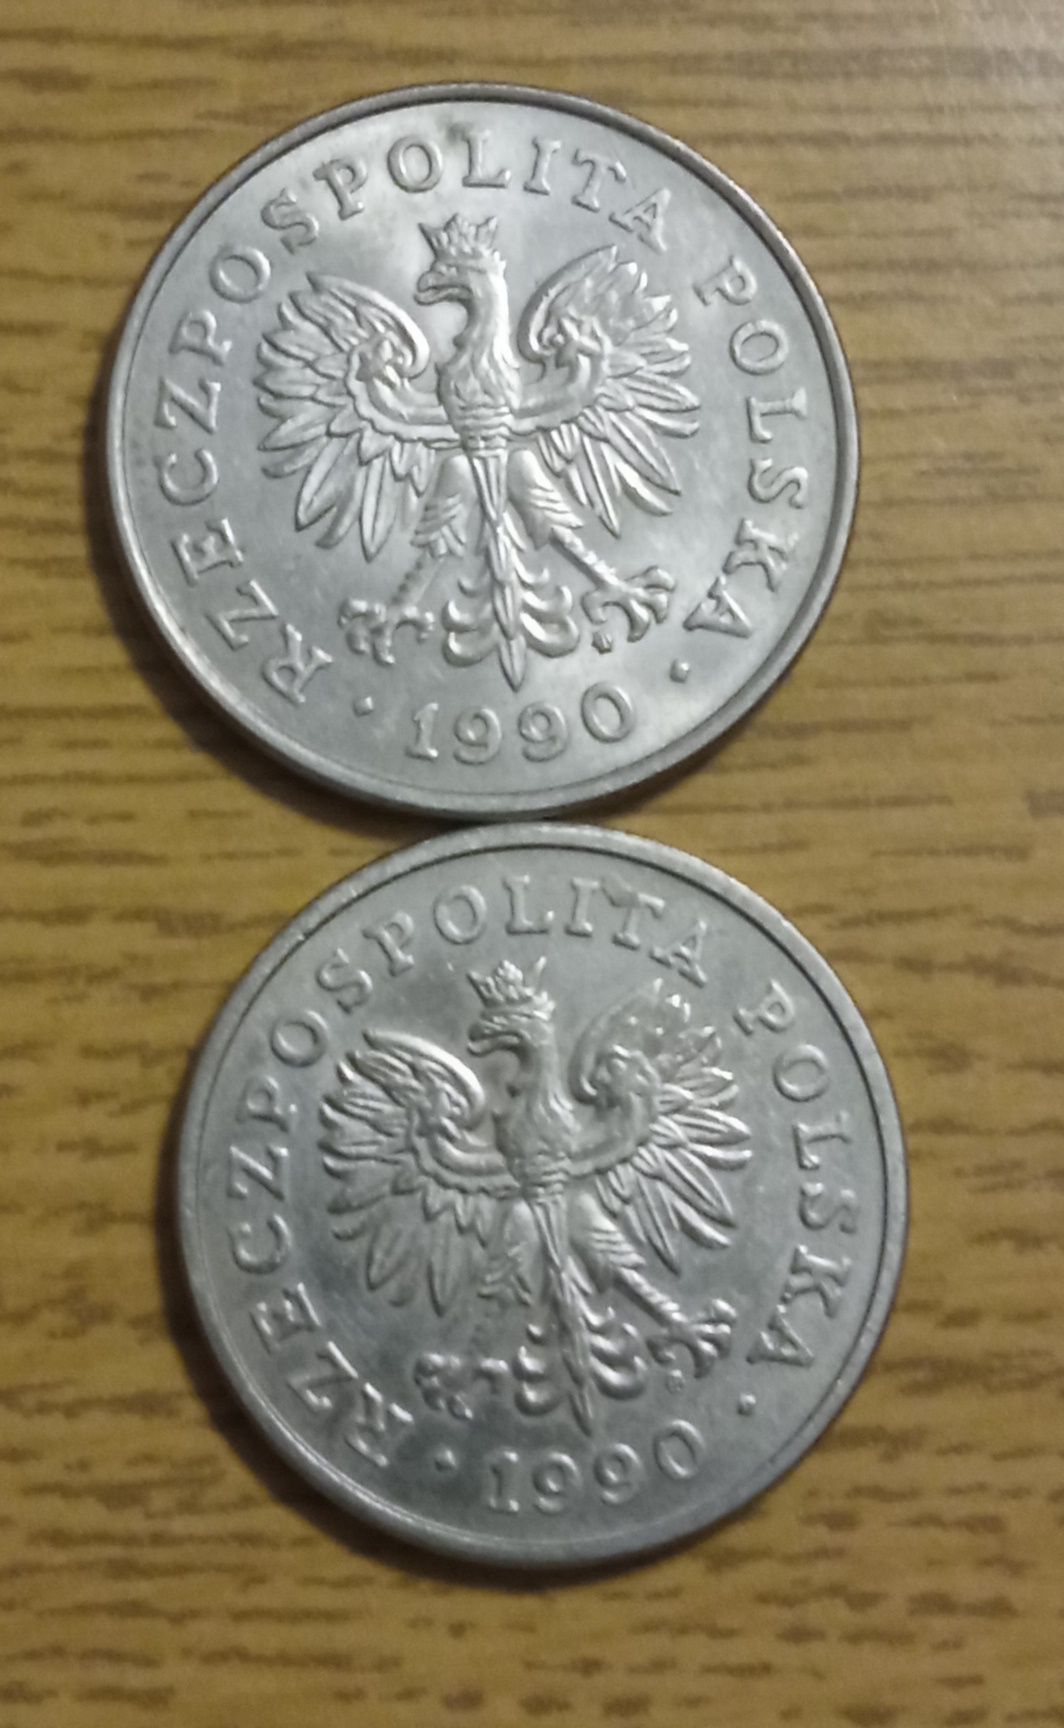 Moneta 50 i 100 zł z 1990 roku